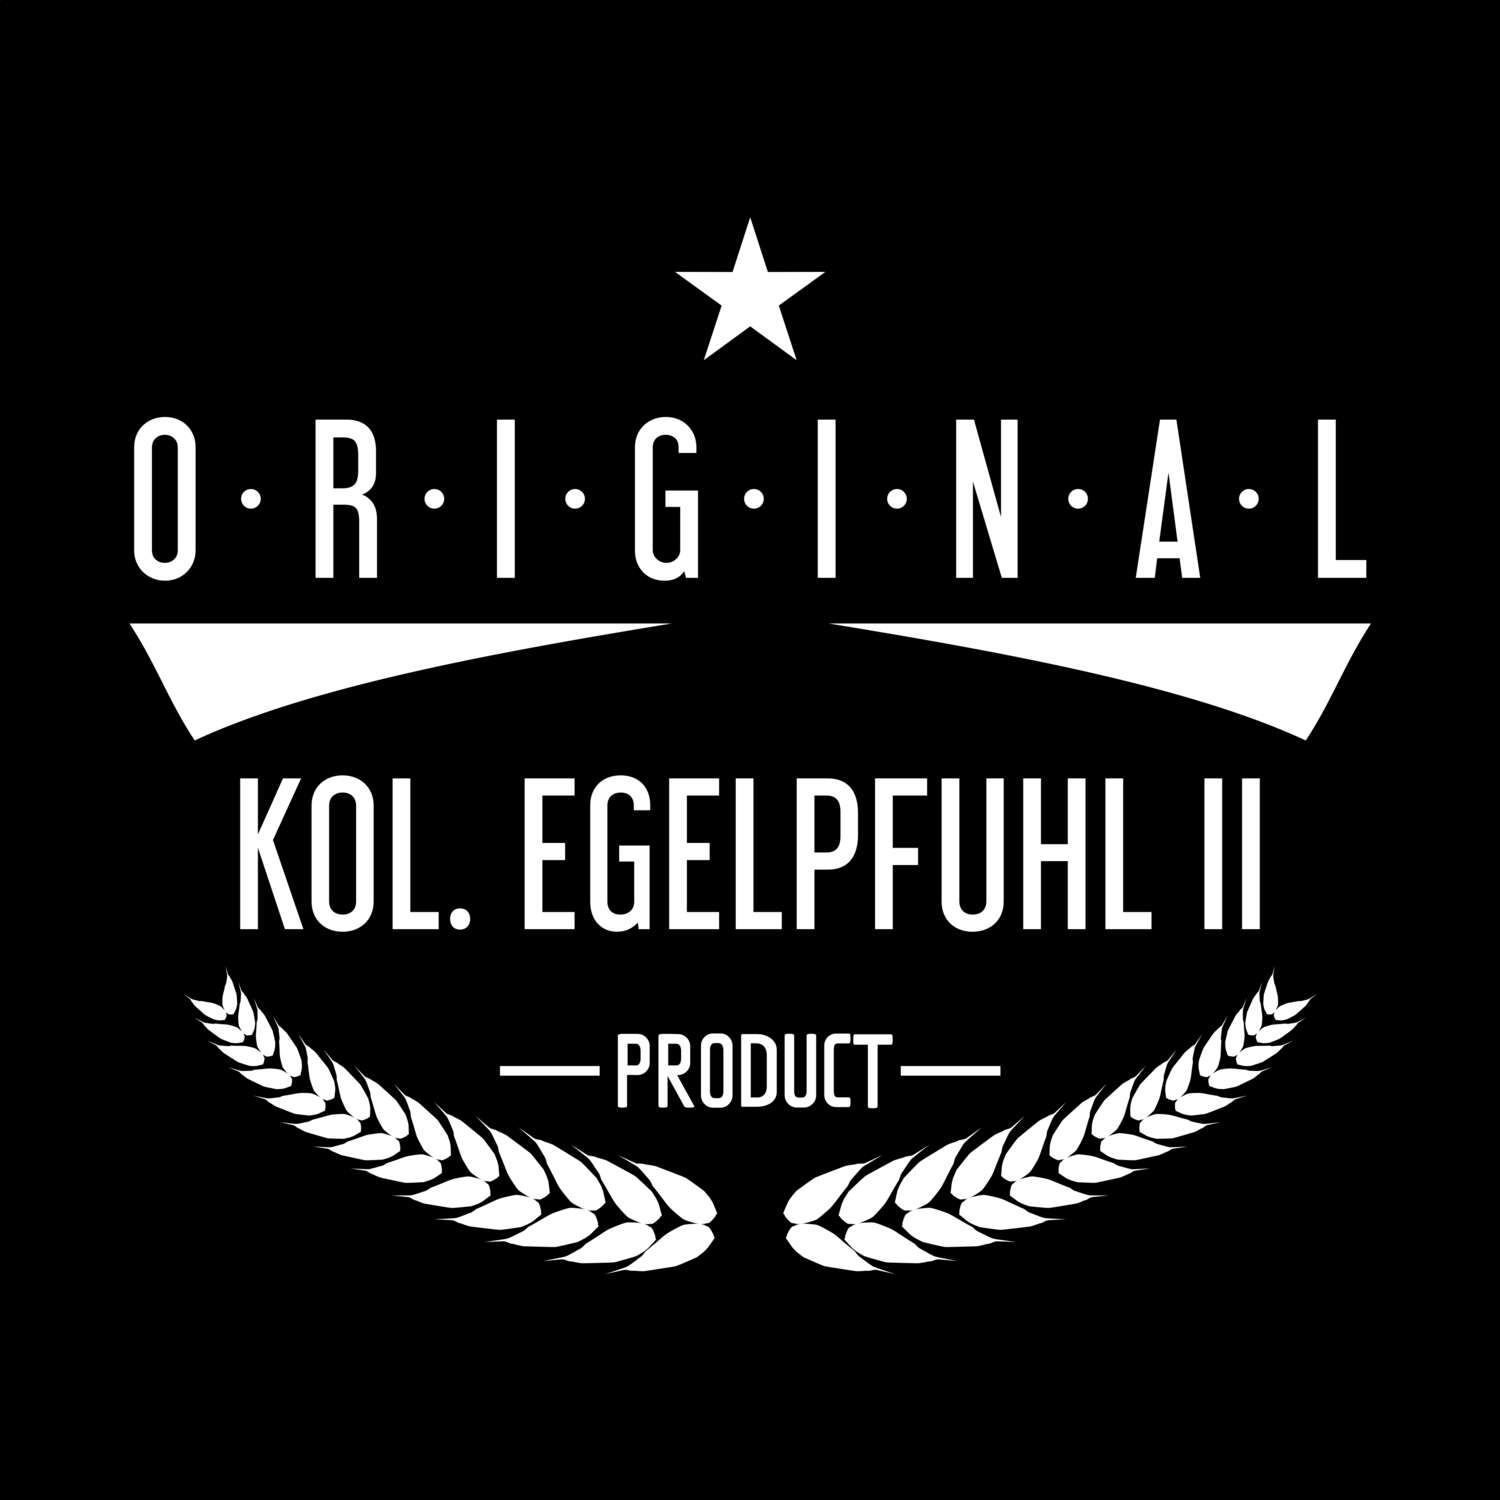 Kol. Egelpfuhl II T-Shirt »Original Product«